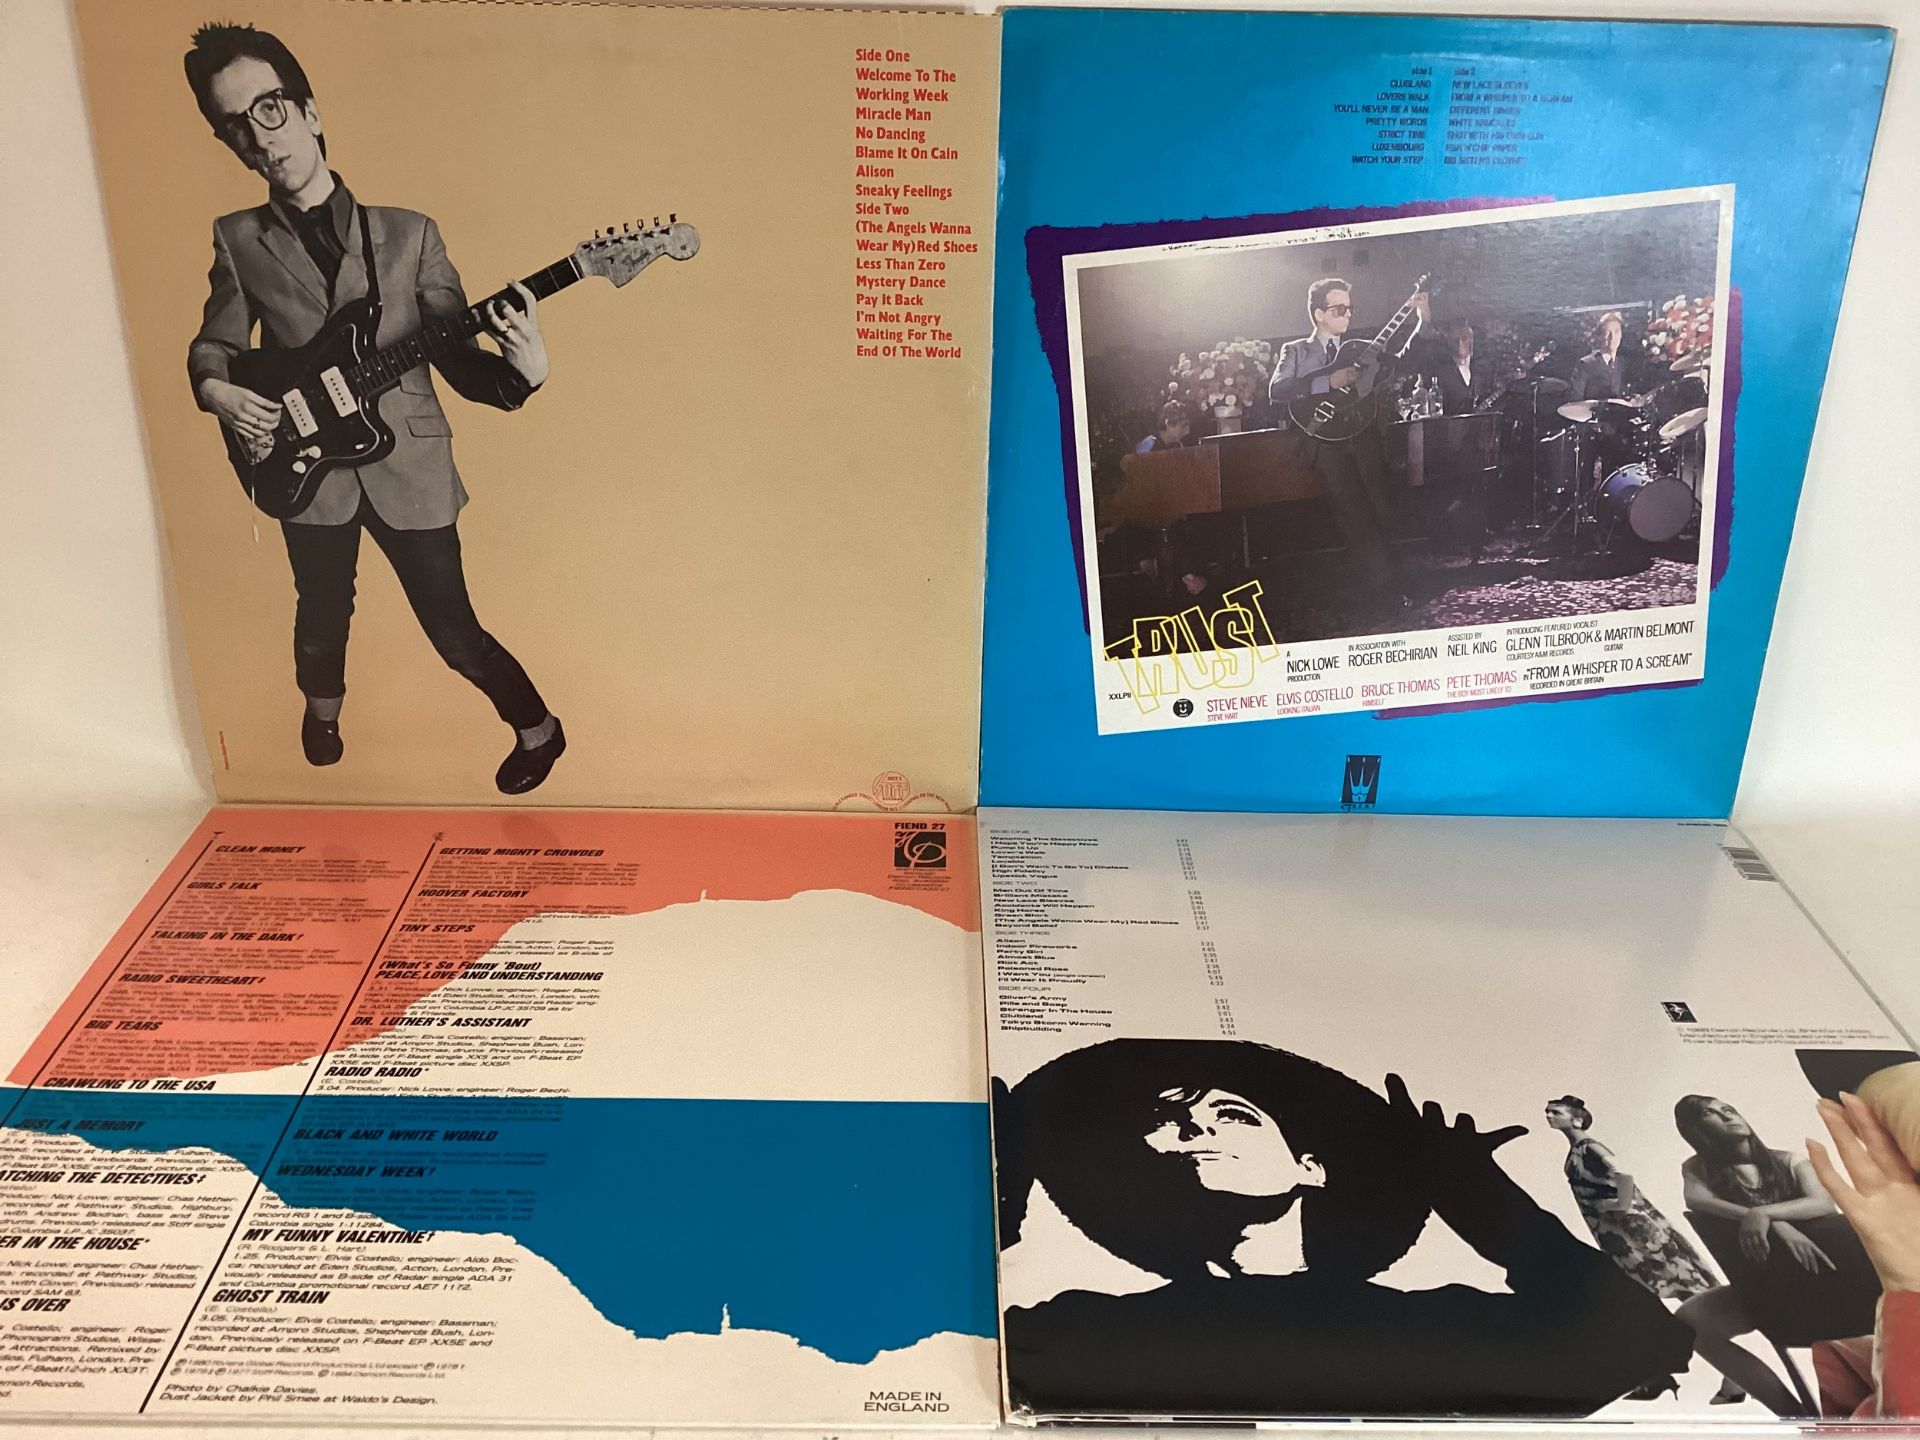 VARIOUS ELVIS COSTELLO VINYL LP RECORDS X 4. Copies found here of - Trust - Girls + £ + Girls - My - Image 2 of 2